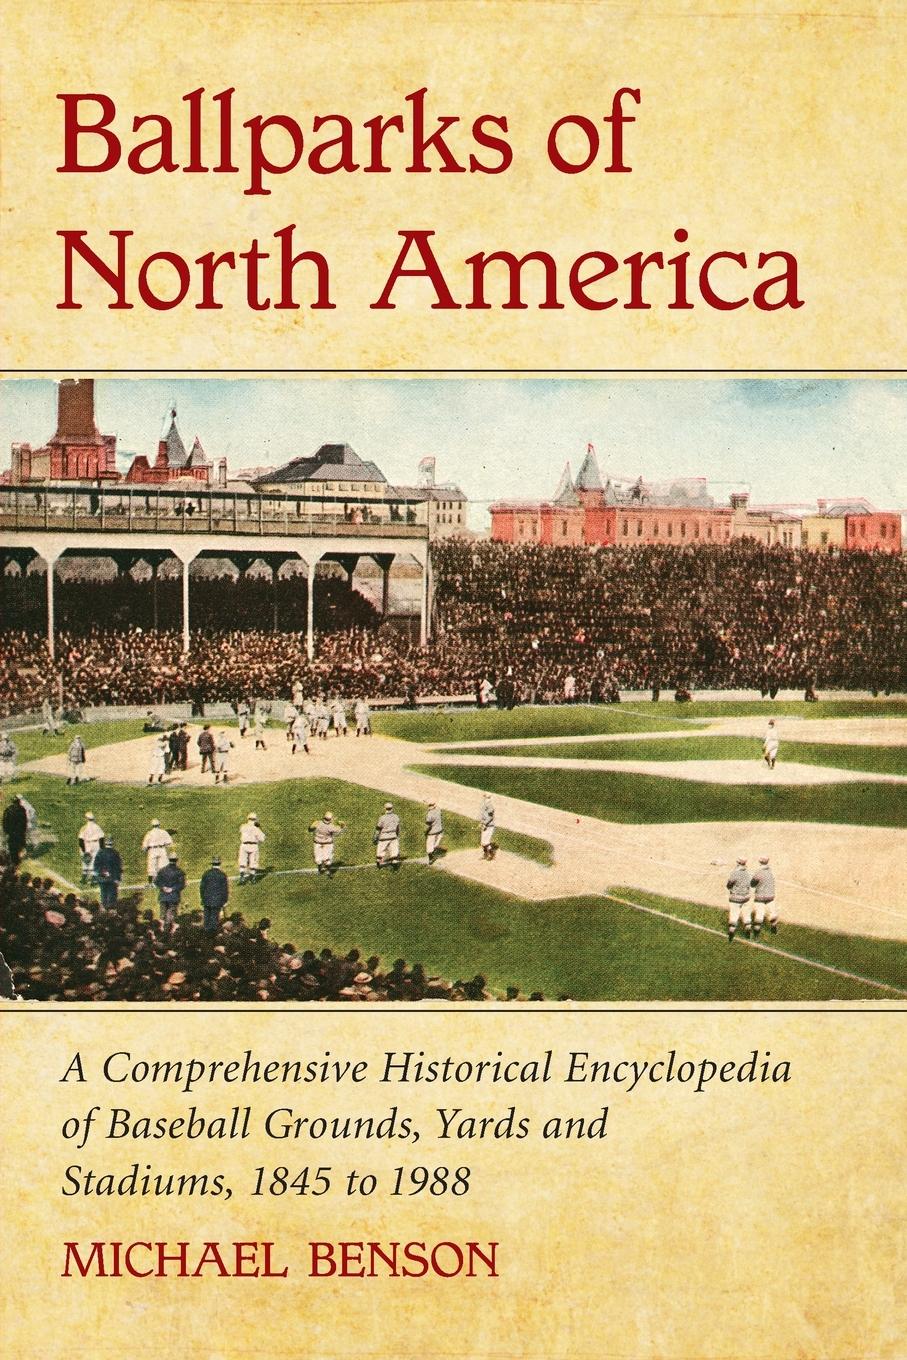 Ballparks of North America - Benson, Michael